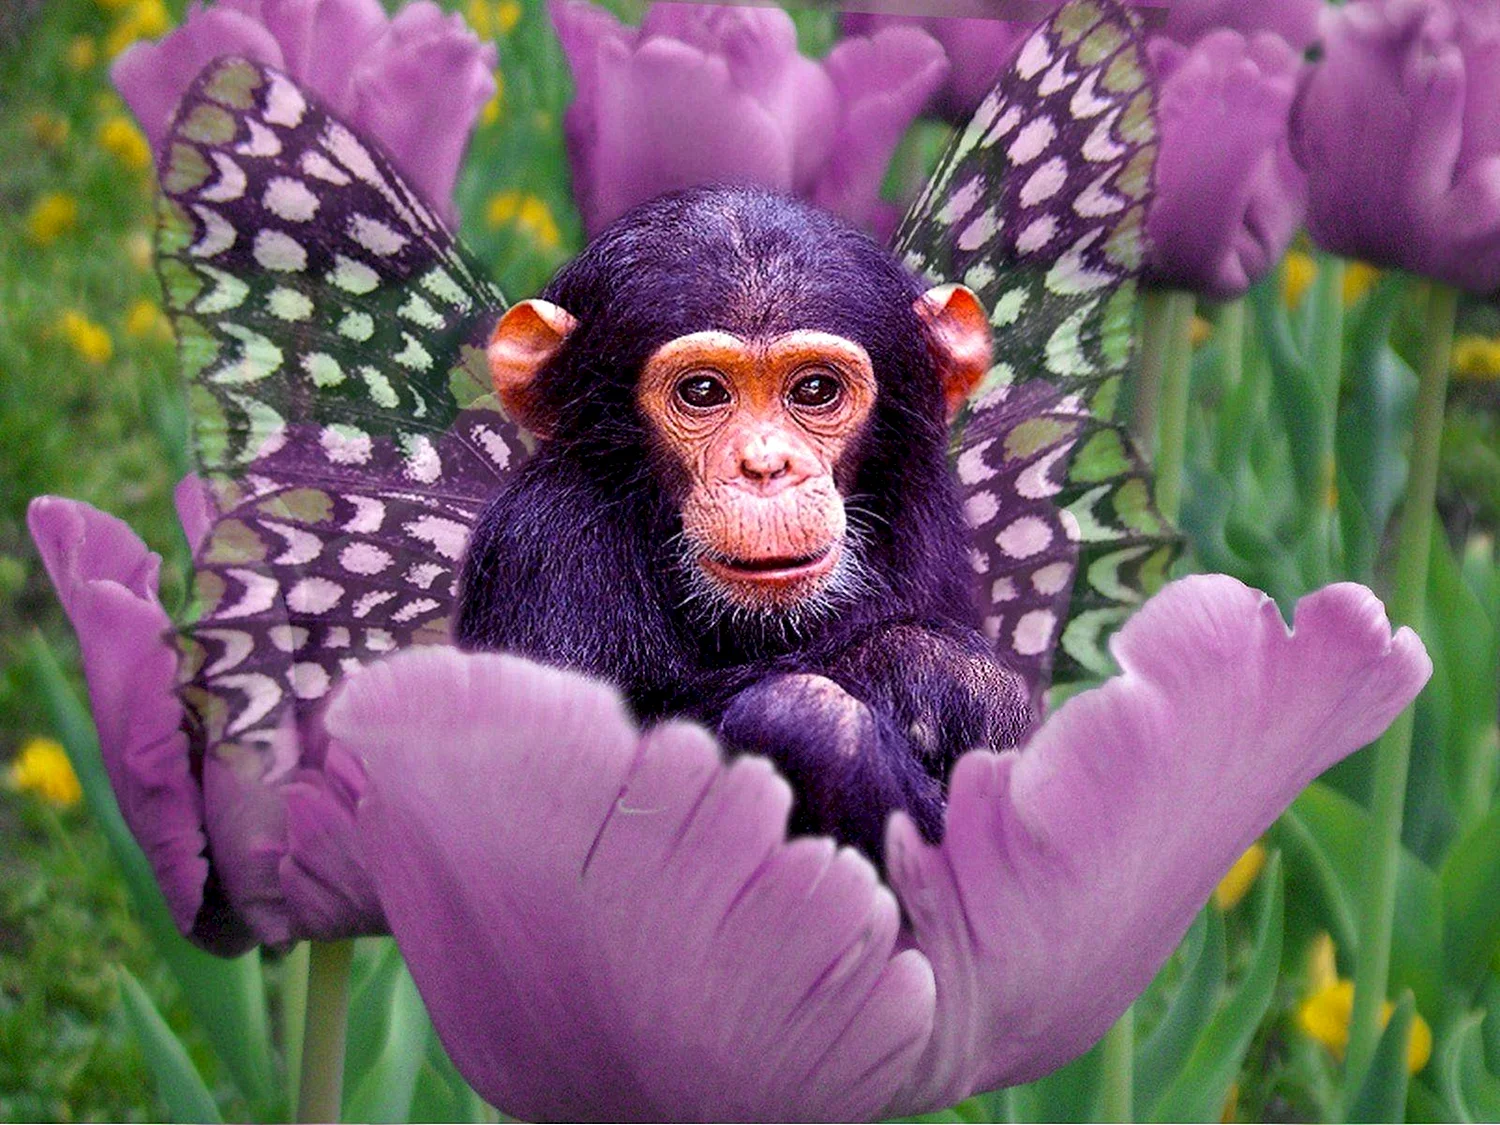 Красивая обезьянка